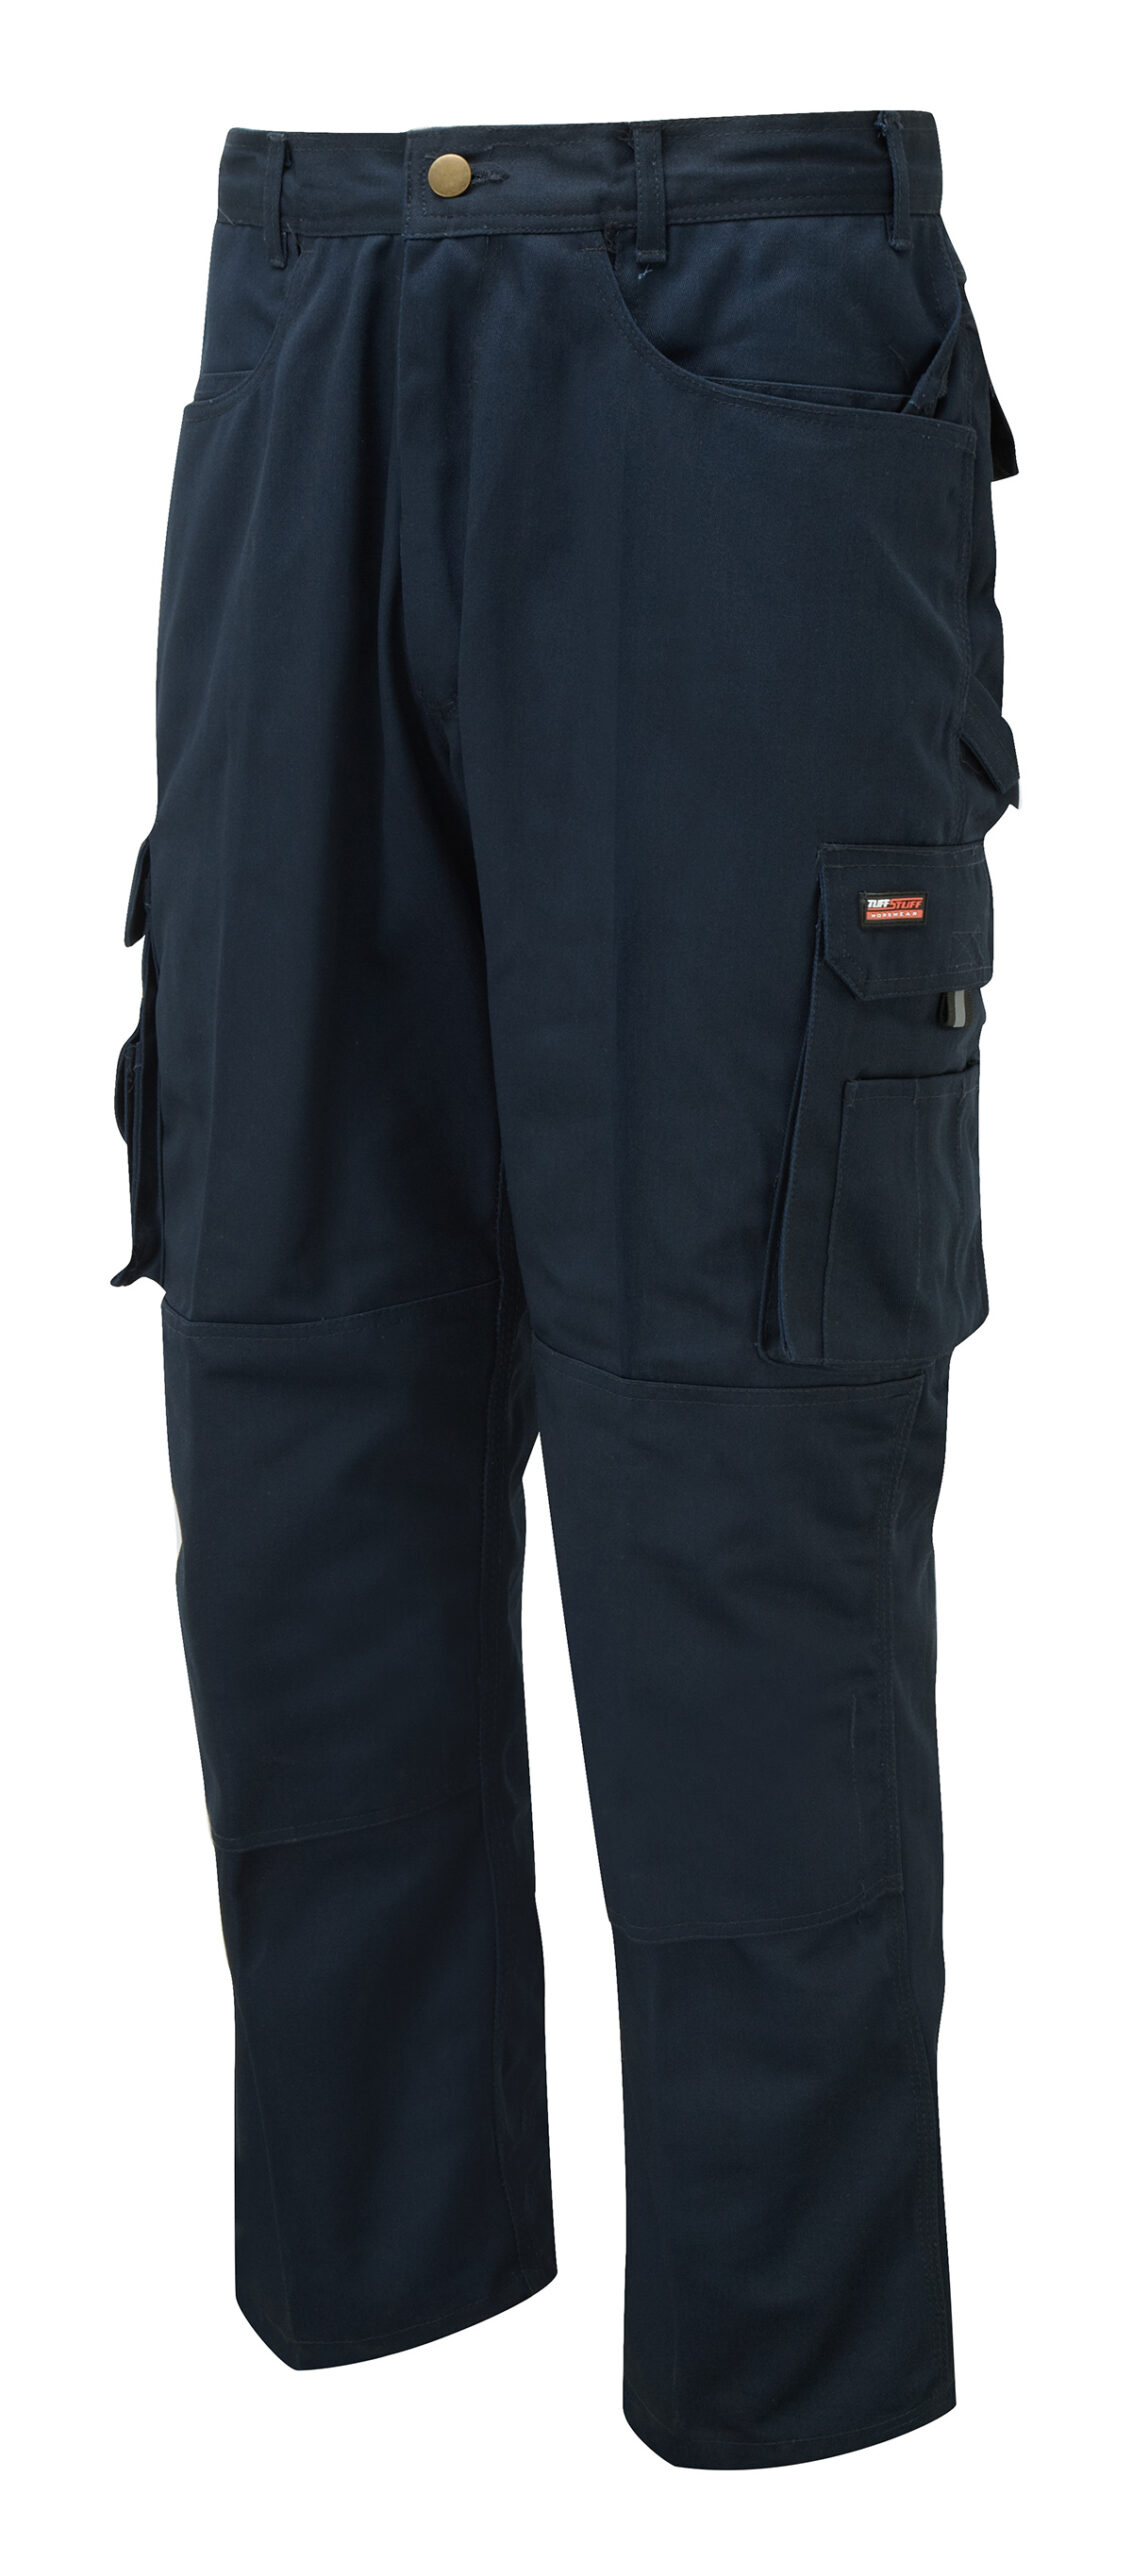 Castle TuffStuff 711 Pro Work knee-pad combat trousers 5 Colours 28-48"